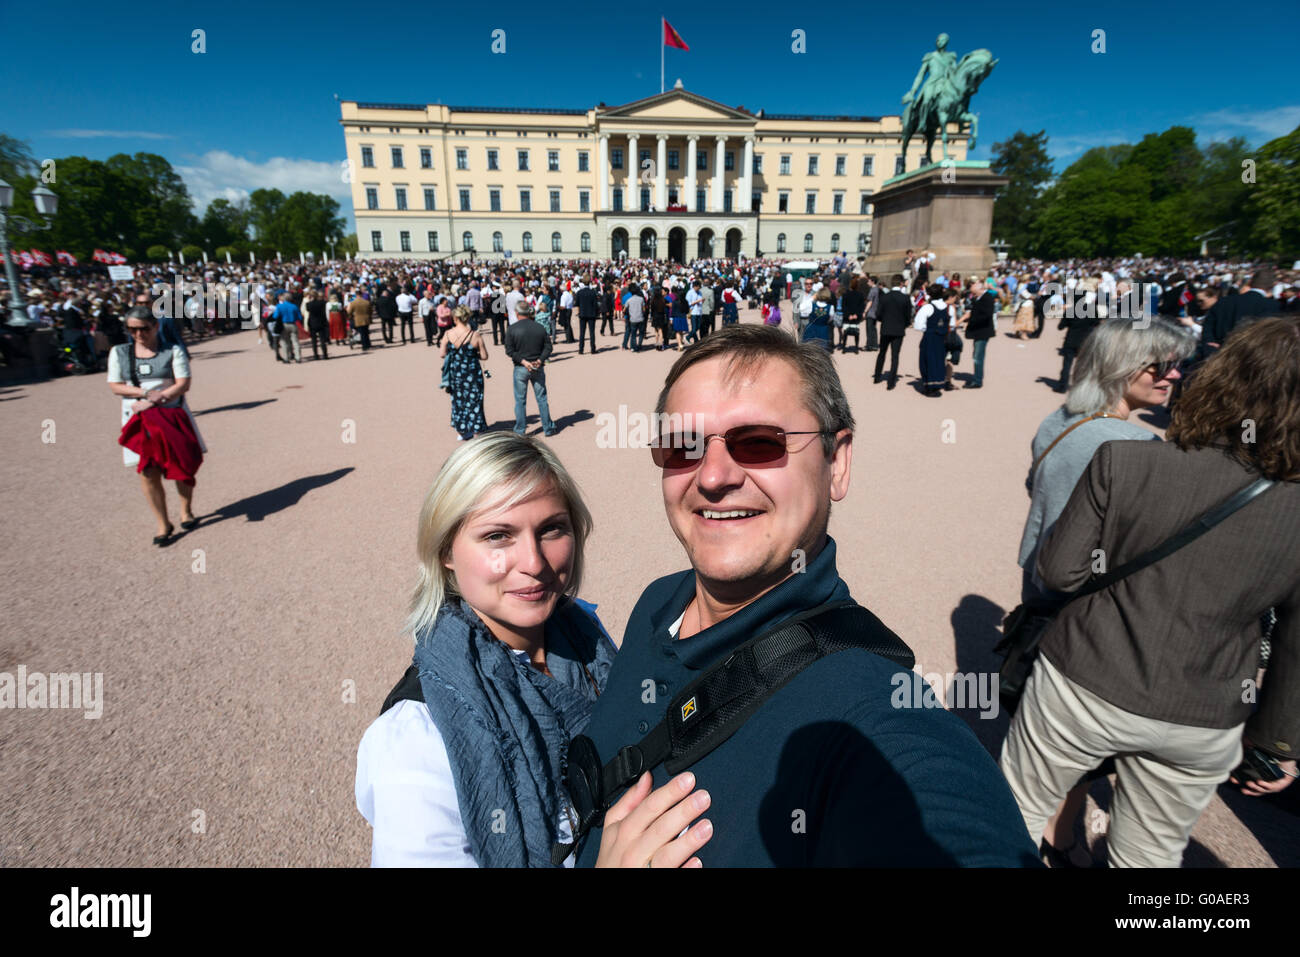 17 May Oslo Norway Celebration Couple Of Happy People Stock Photo Alamy